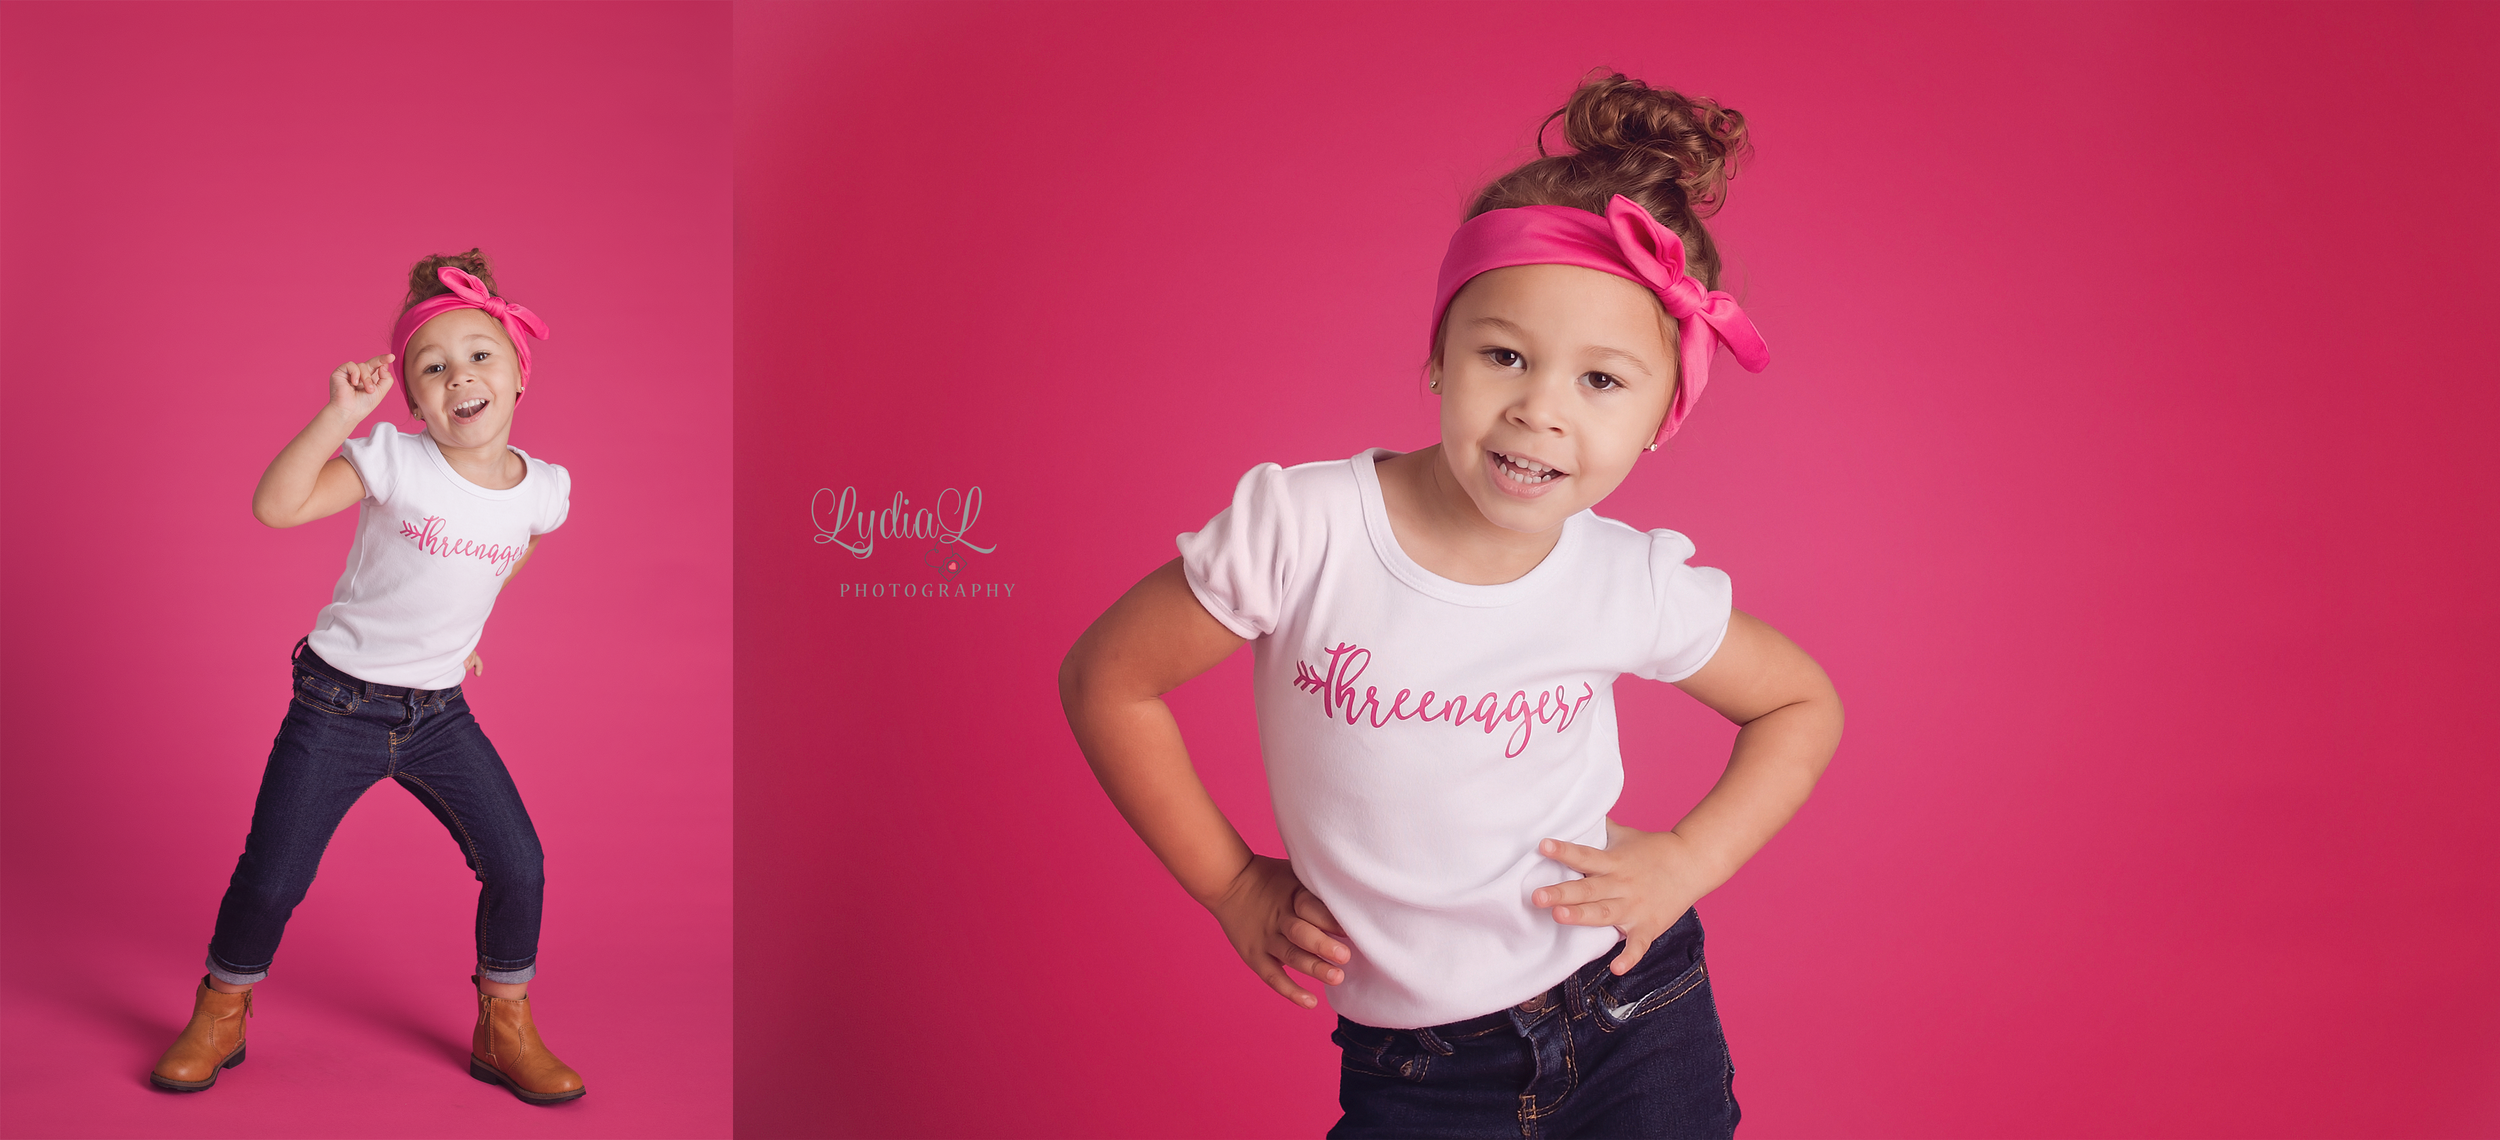 Little girl 3rd birthday photos on pink background nashville tennessee